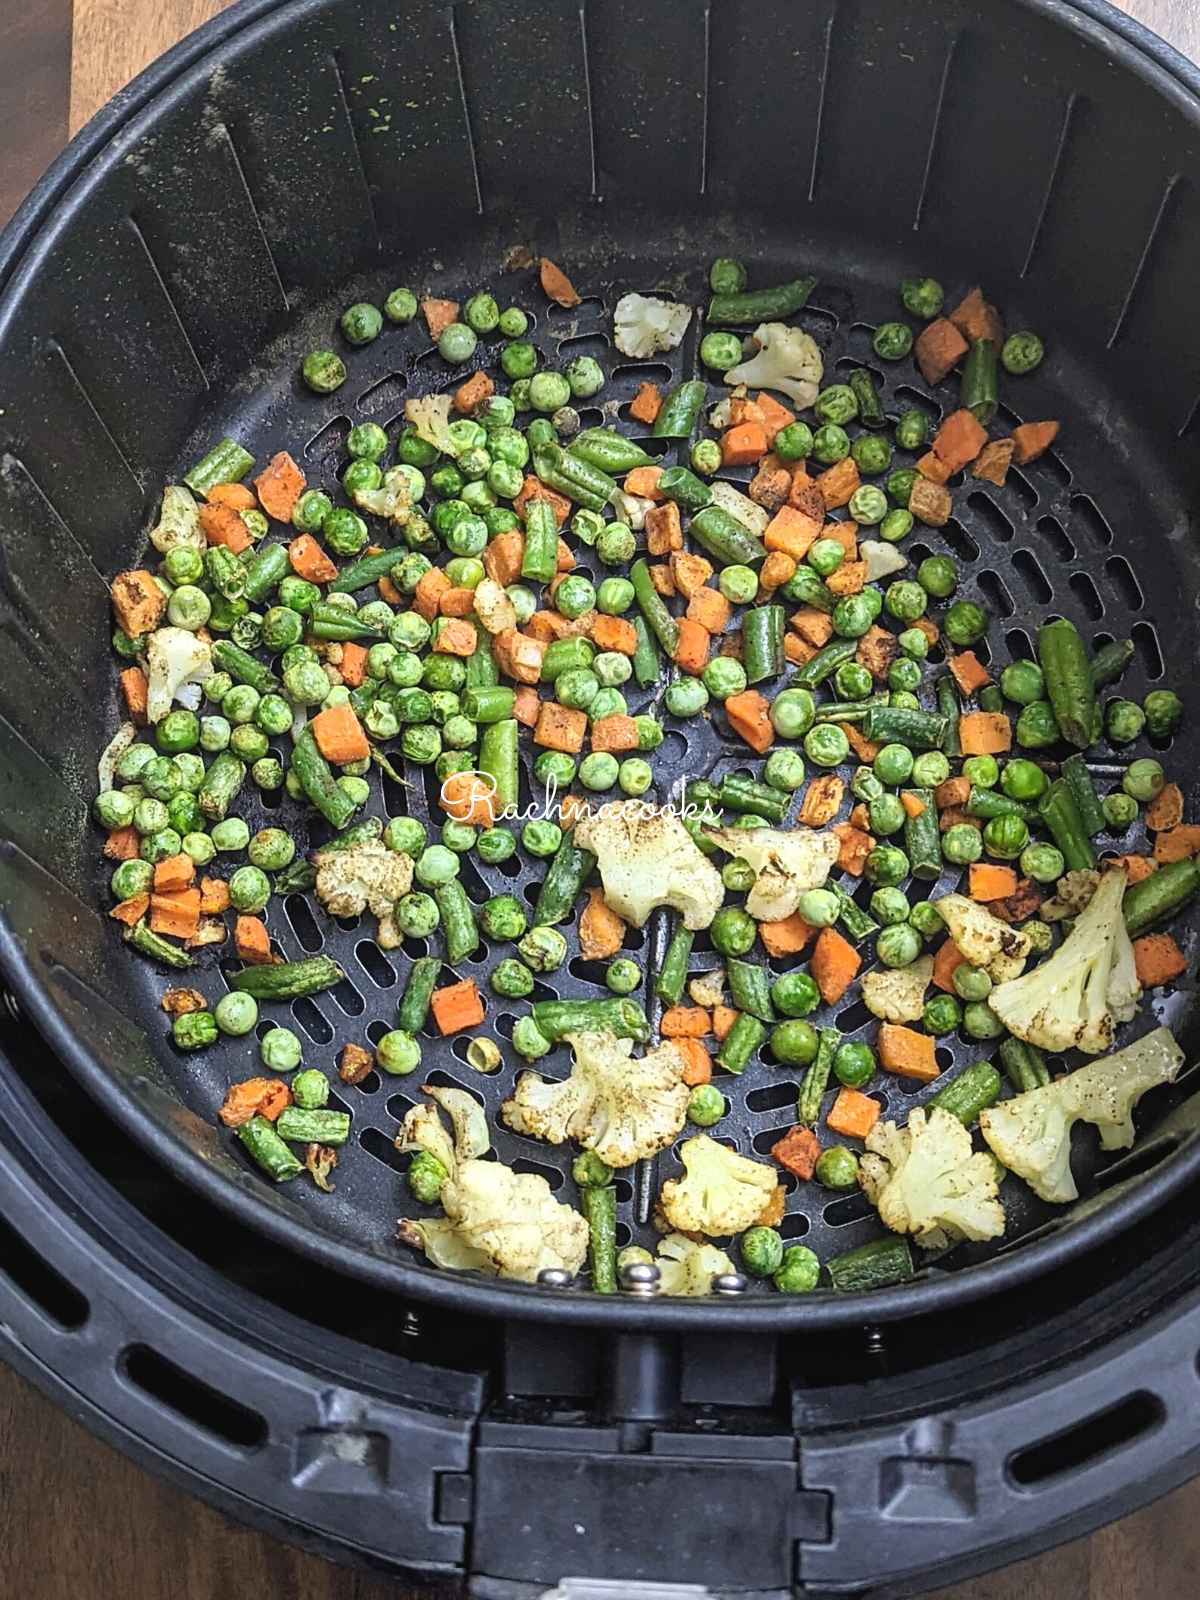 Roasted air fried frozen vegetables in air fryer basket.